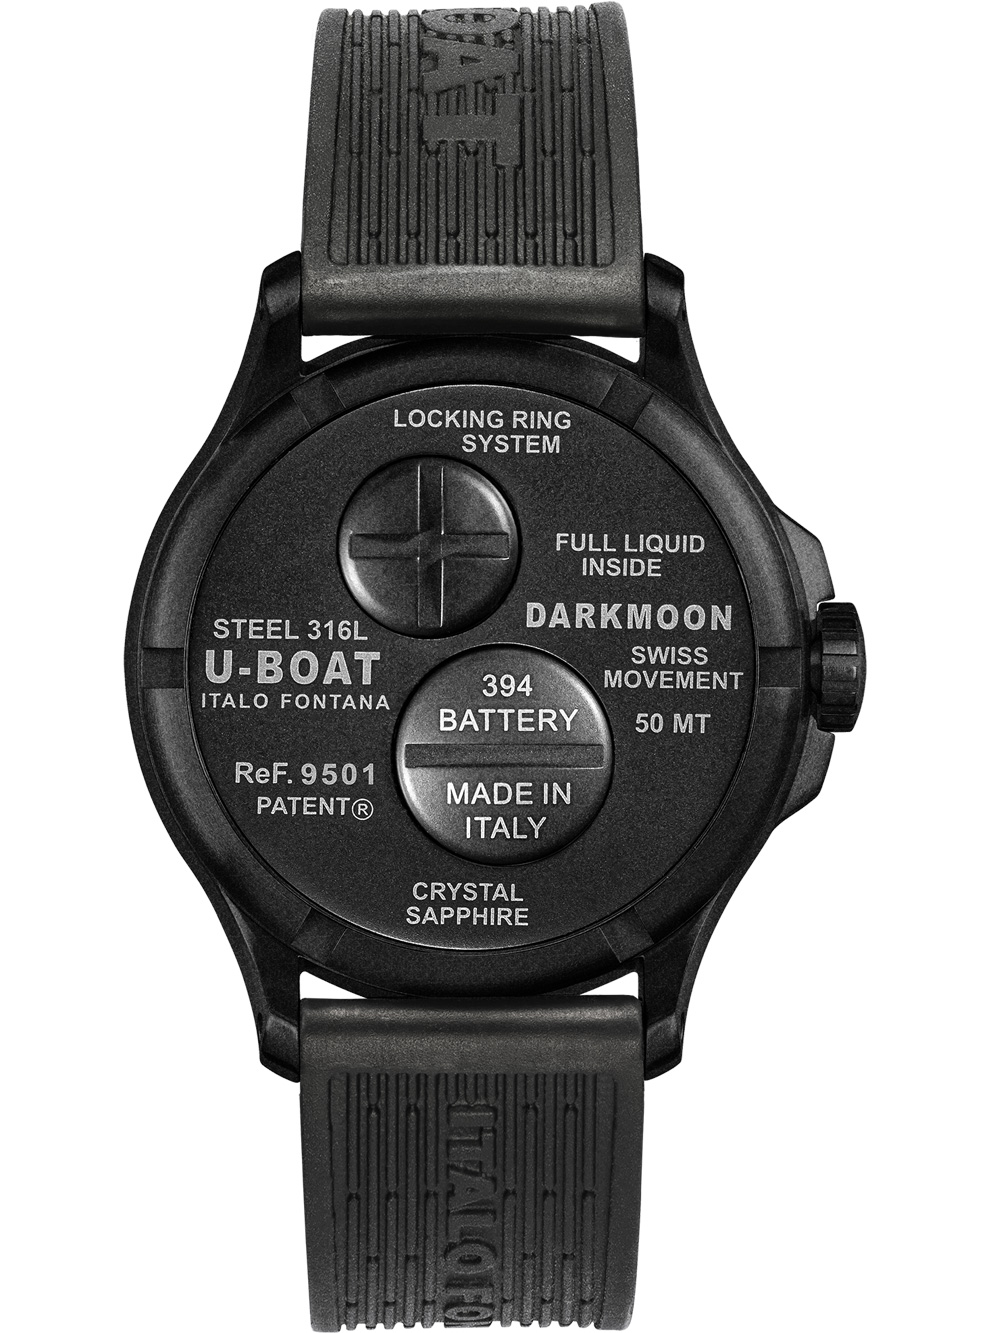 Zegarek męski U-Boat 9501